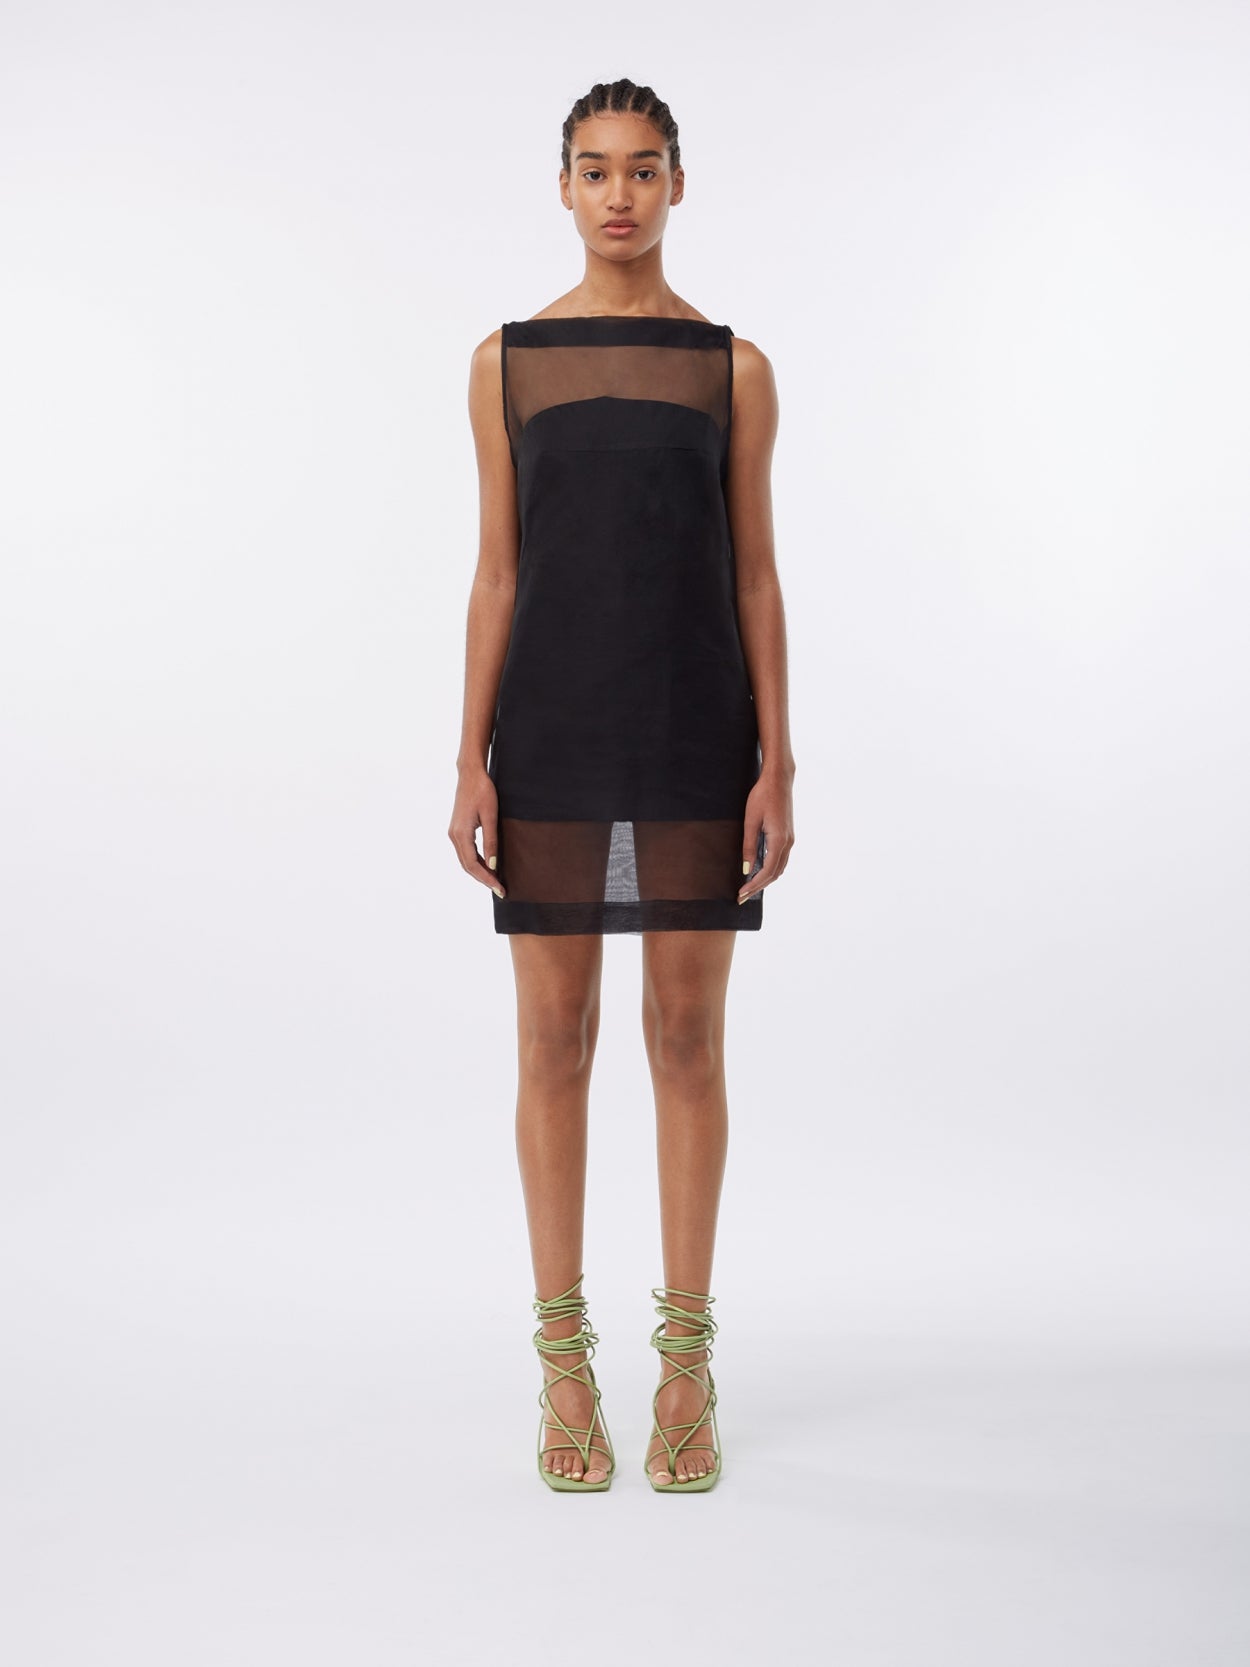 model wearing a black mesh overlay dress